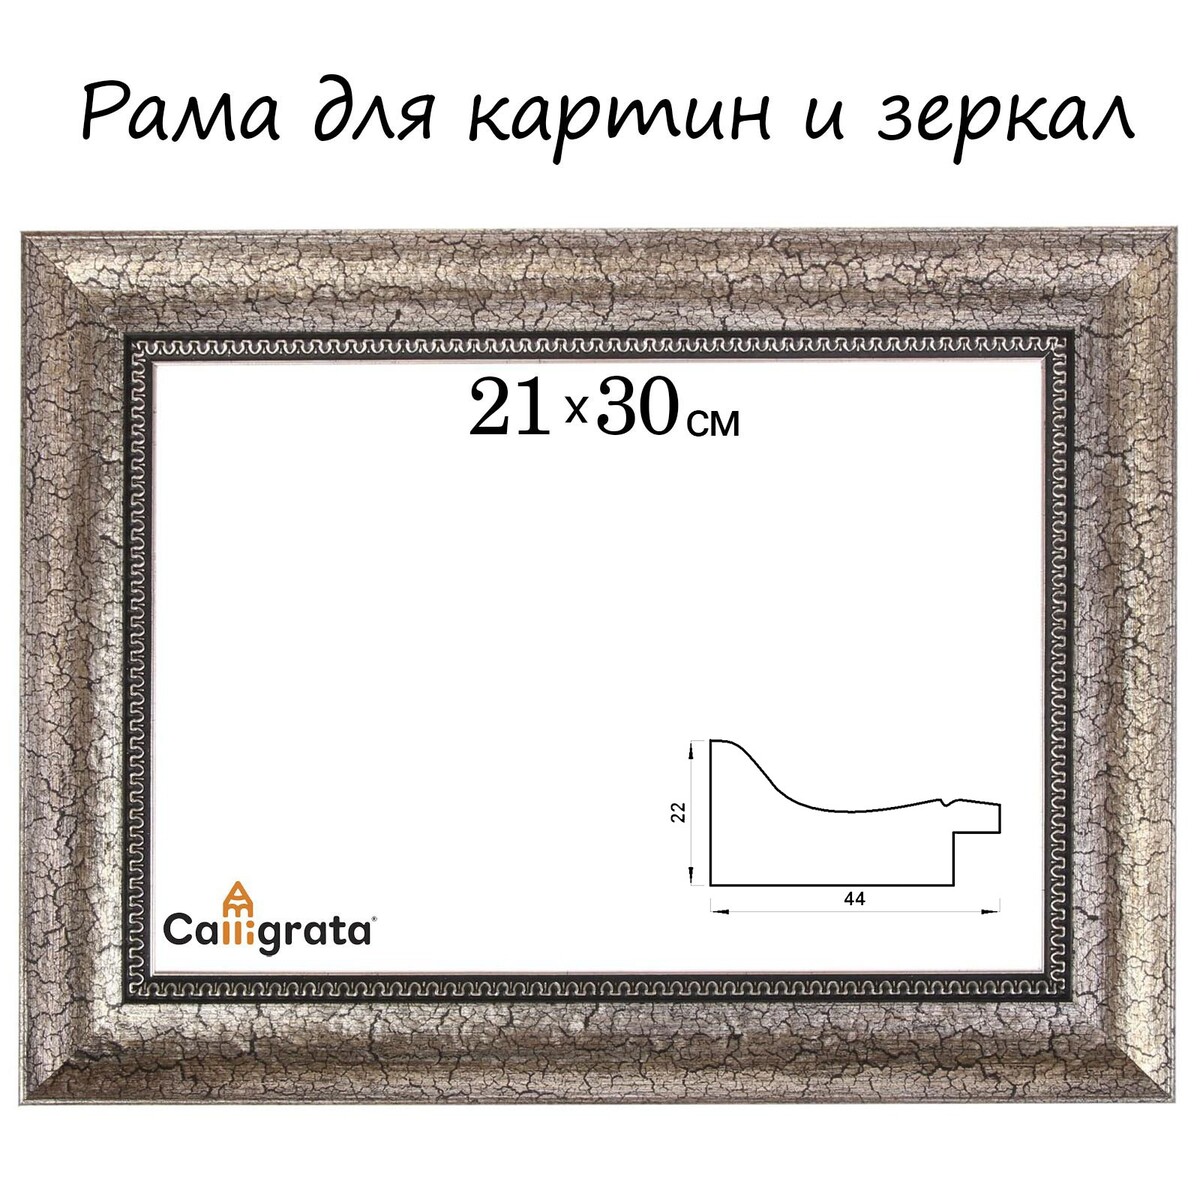 Рама для картин (зеркал) 21 х 30 х 4,4 см, пластиковая, calligrata 6744, серебристая навеска для панелей и зеркал d 35мм 200 шт